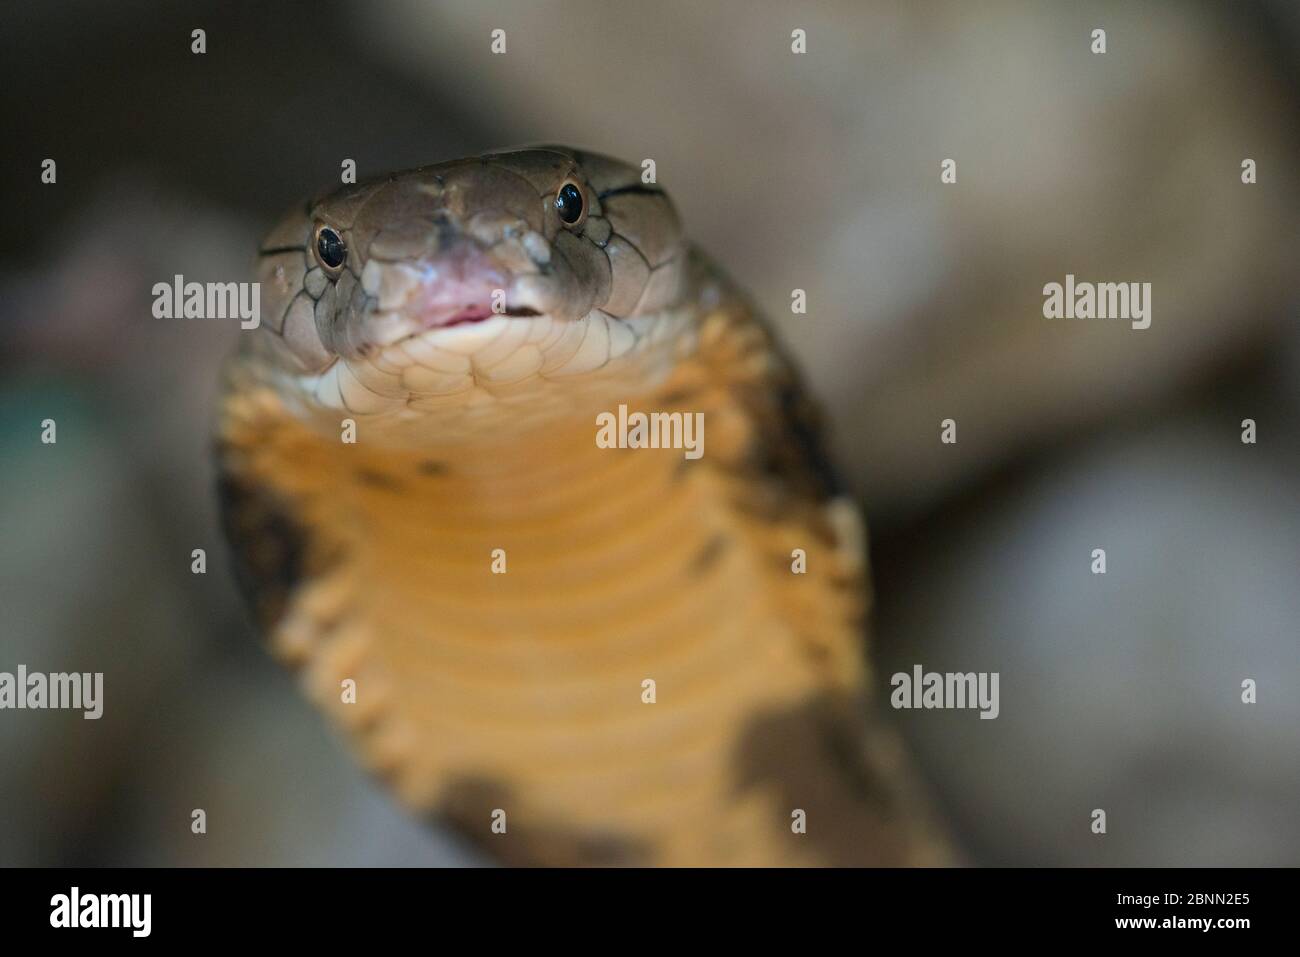 King cobra (Ophiophagus hannah) captive, occurs in Asia. Stock Photo